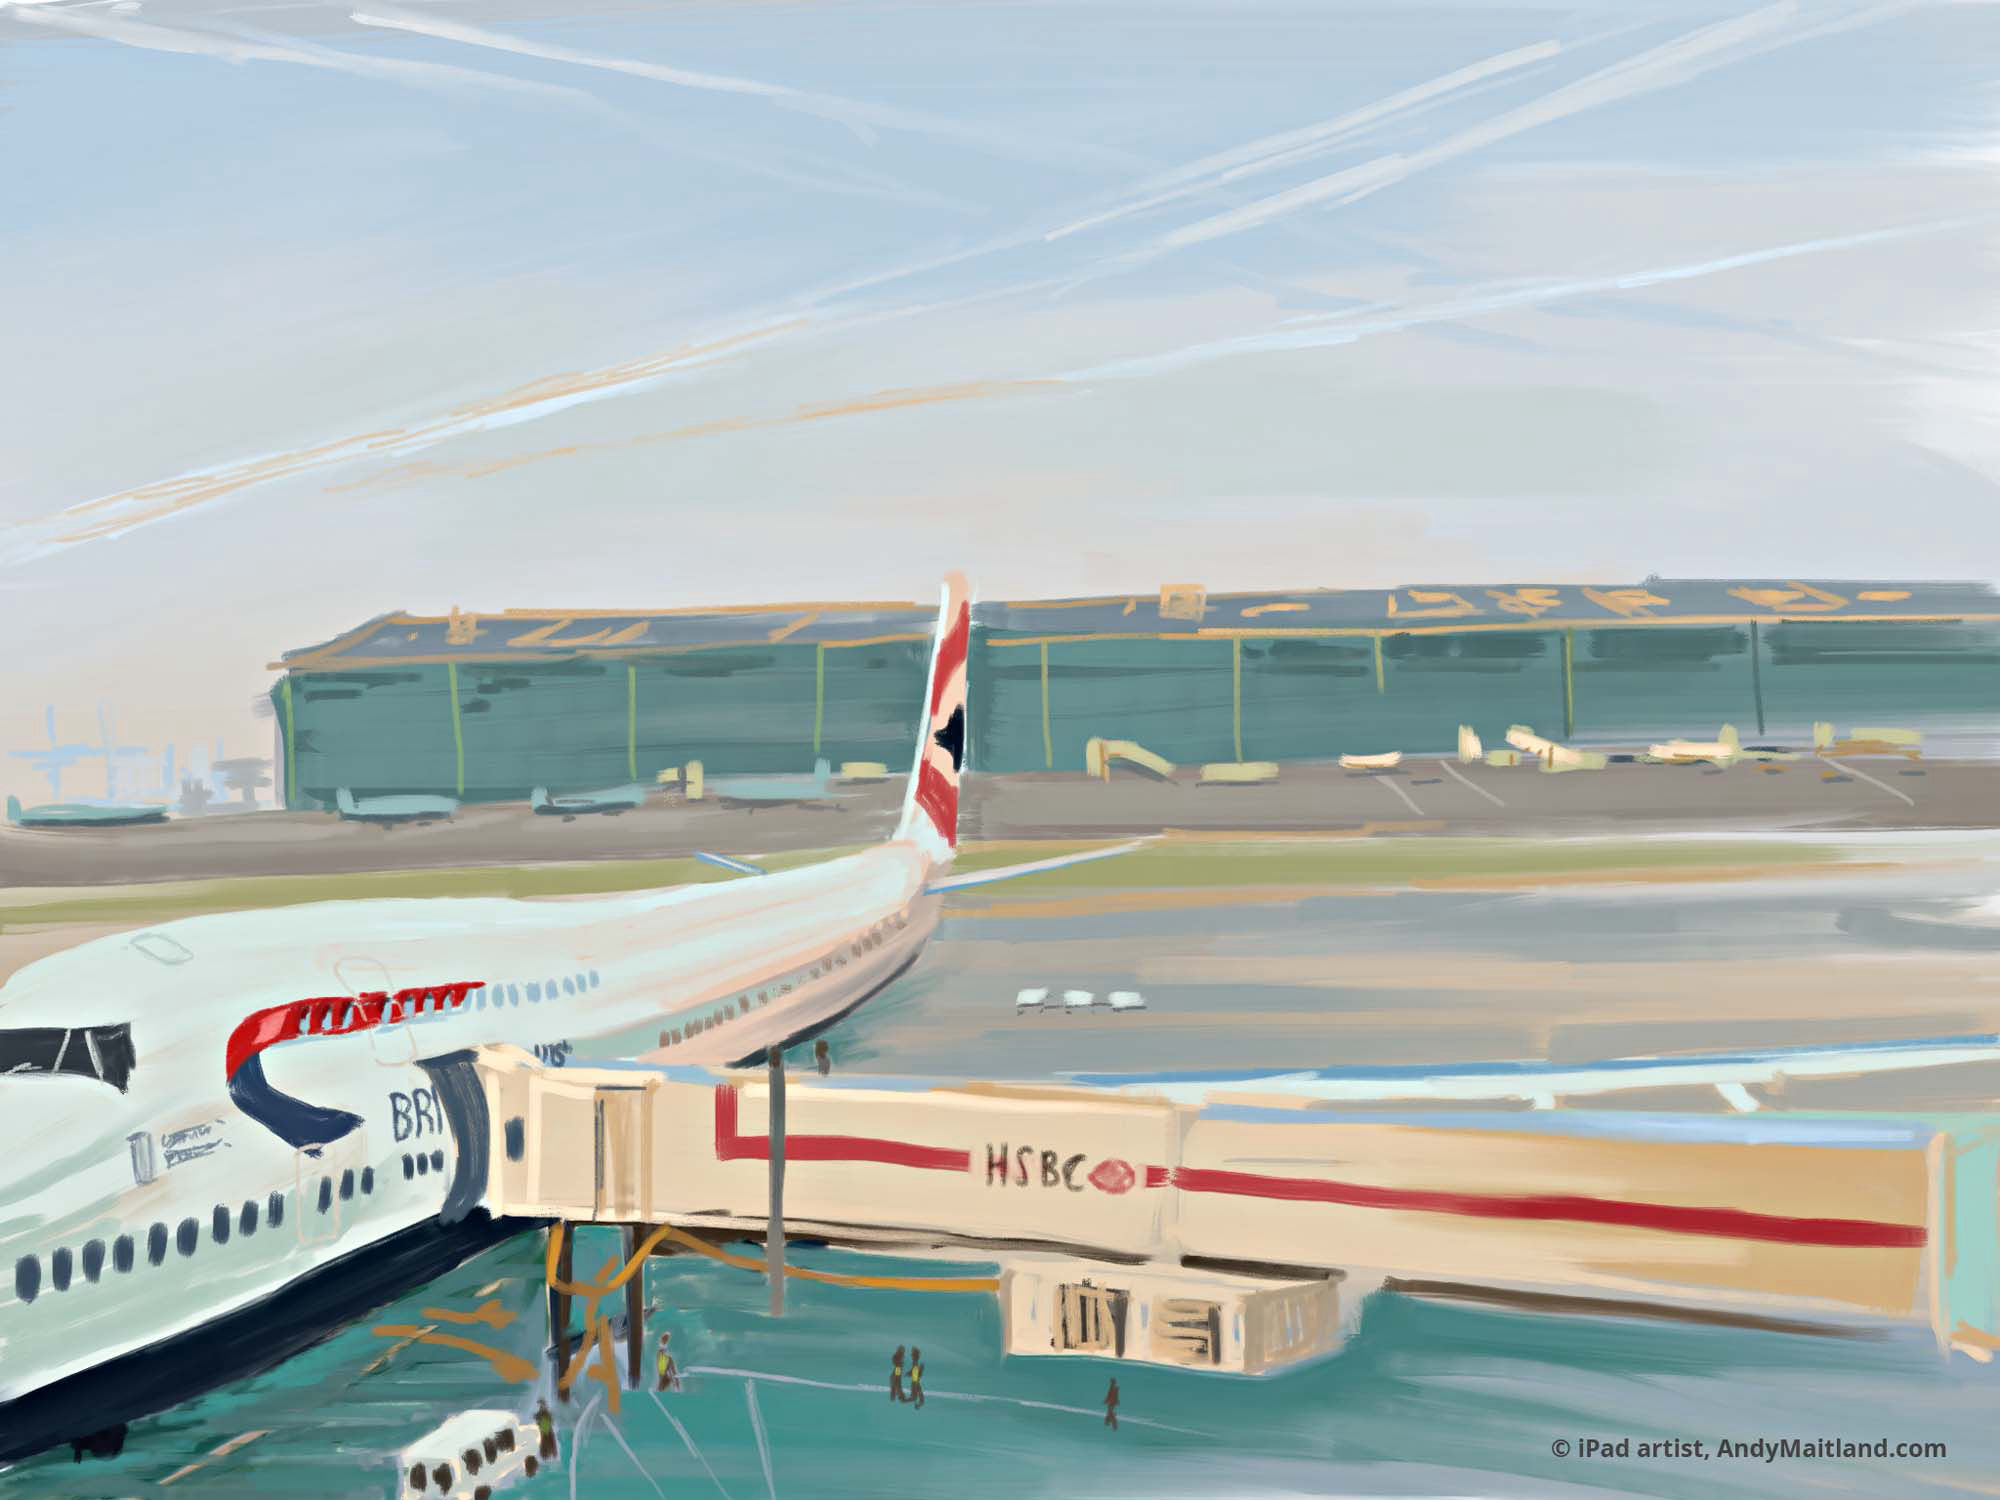 2014 - Live iPad drawing and digital art classes at London Heathrow Airport, Andy Maitland, iPad artist